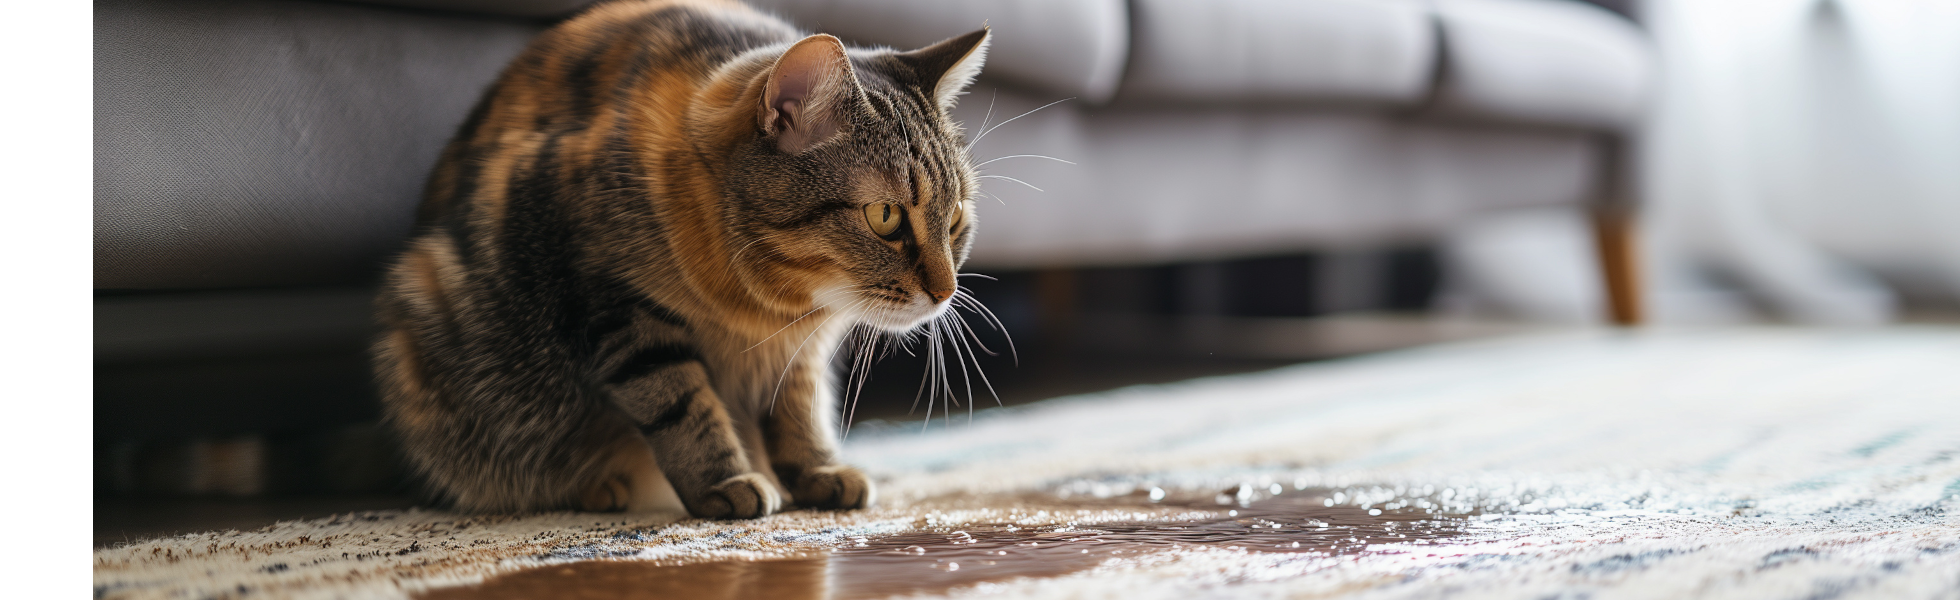 Katze pinkelt überall hin Teppichfleck